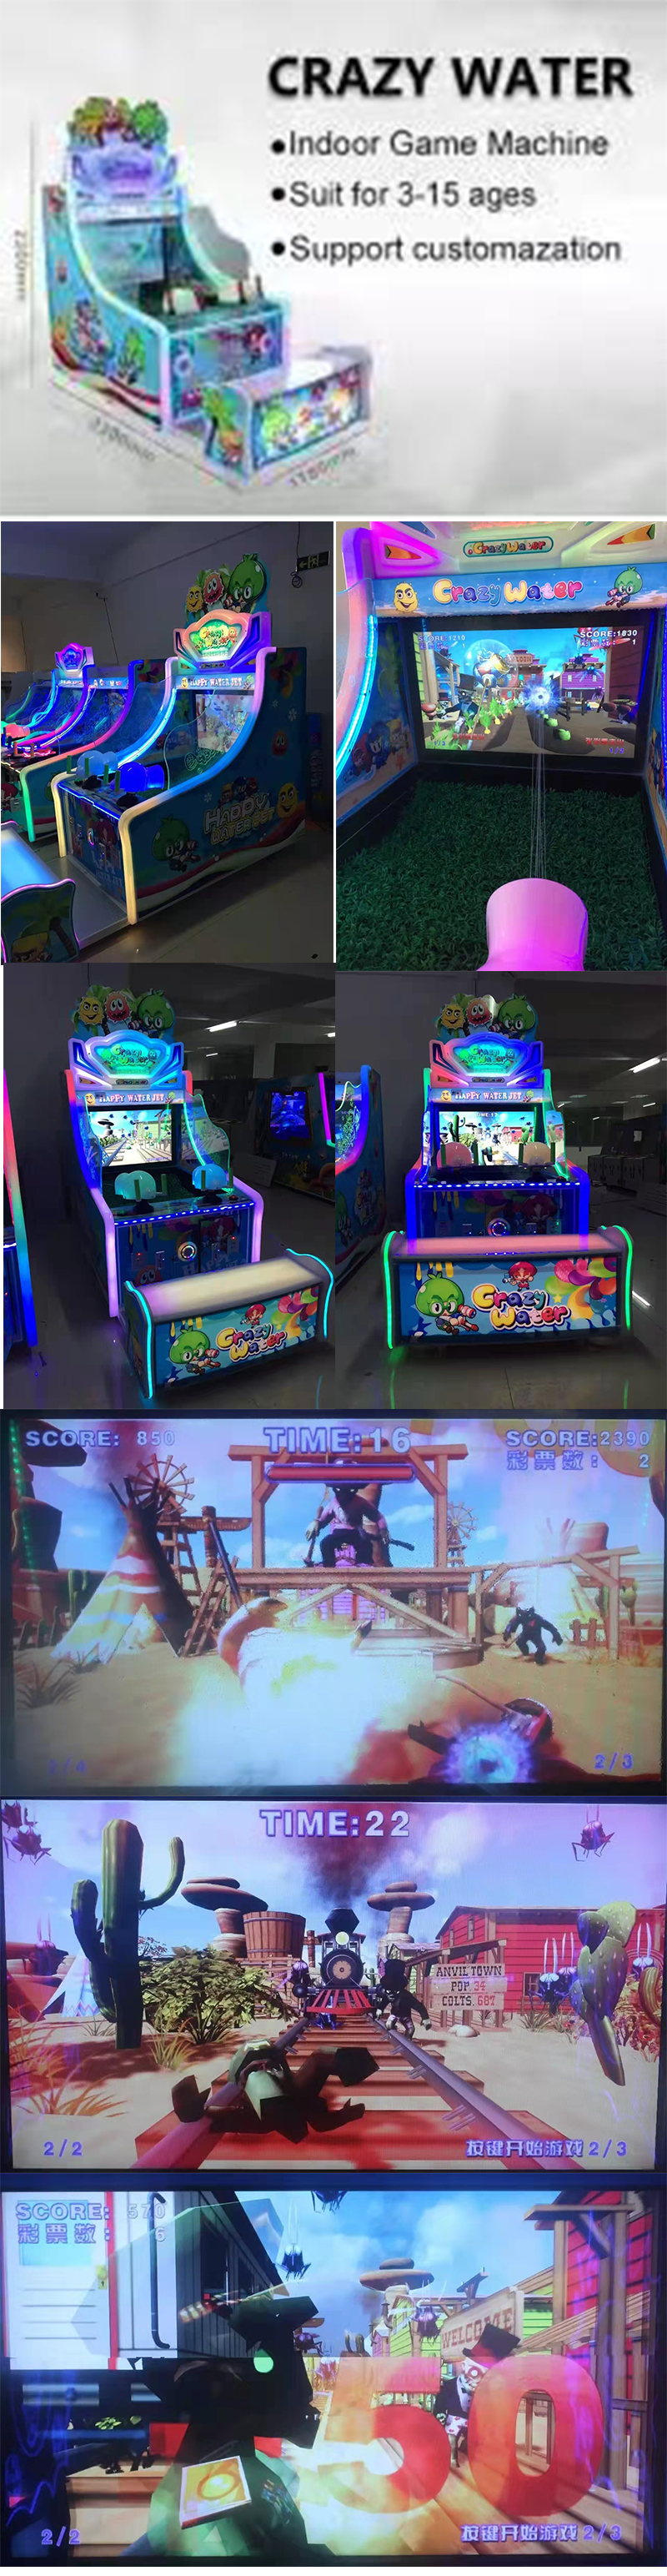 Crazy-Water-Shooting-Arcade-Hot-Sale-Family-Fun-game-machine-Tomy-Arcade